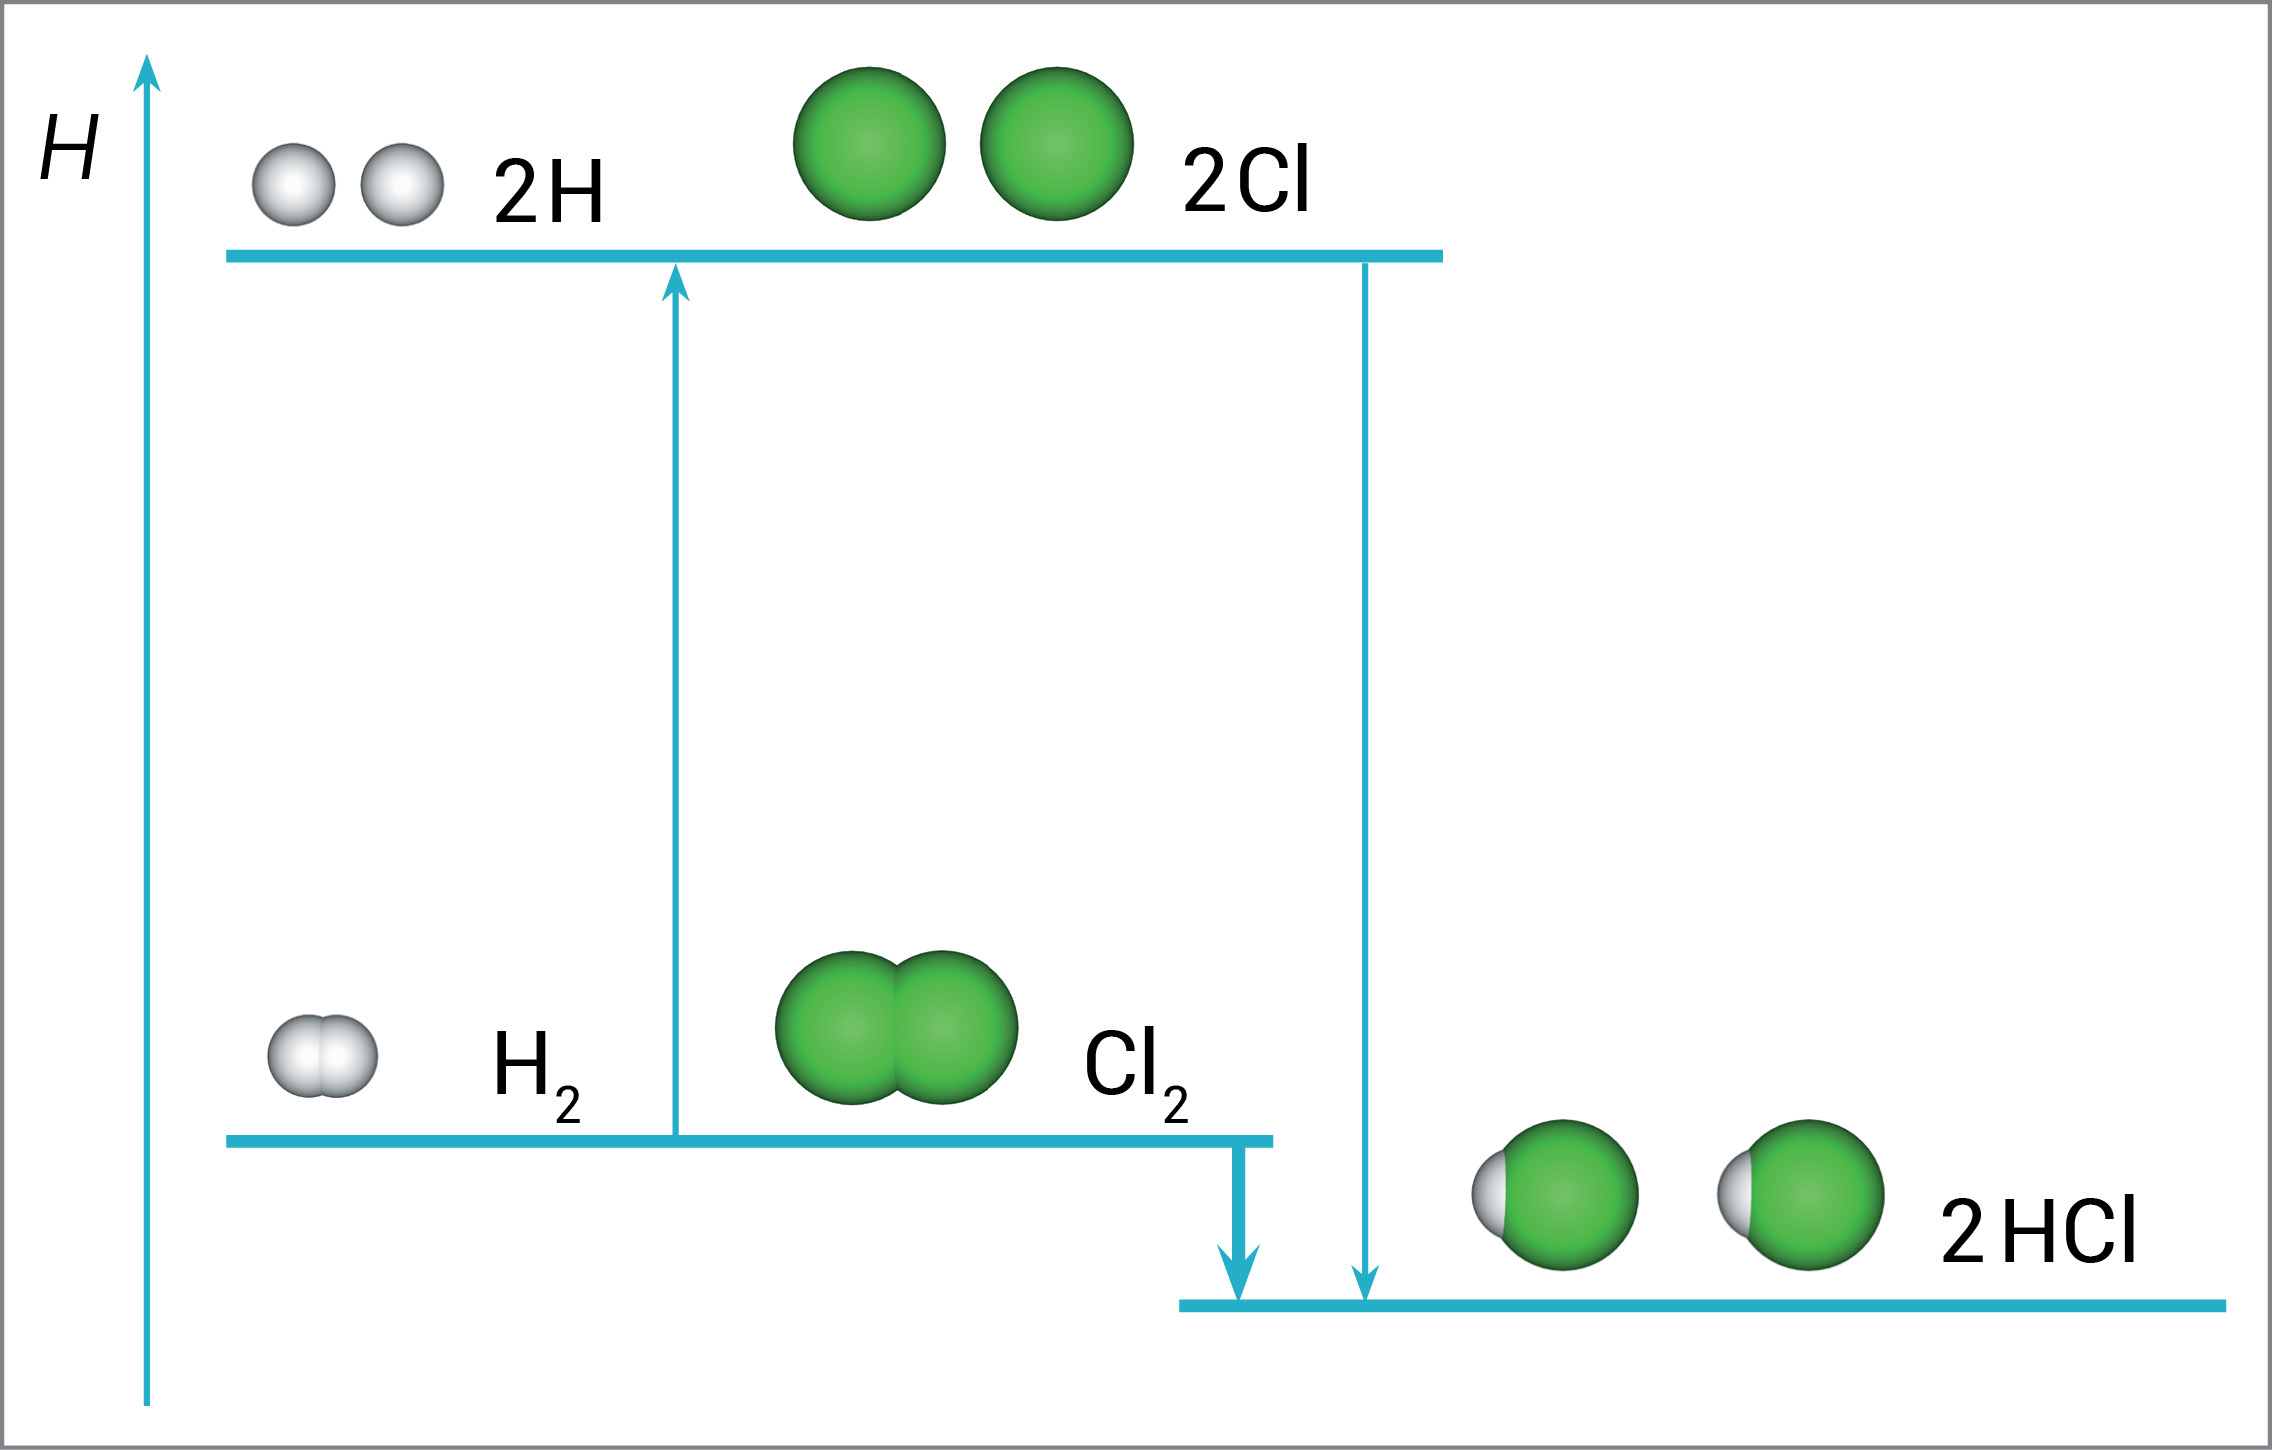 Slika prikazuje shematski prikaz nastajanje klorovodika sintezom iz klora i vodika